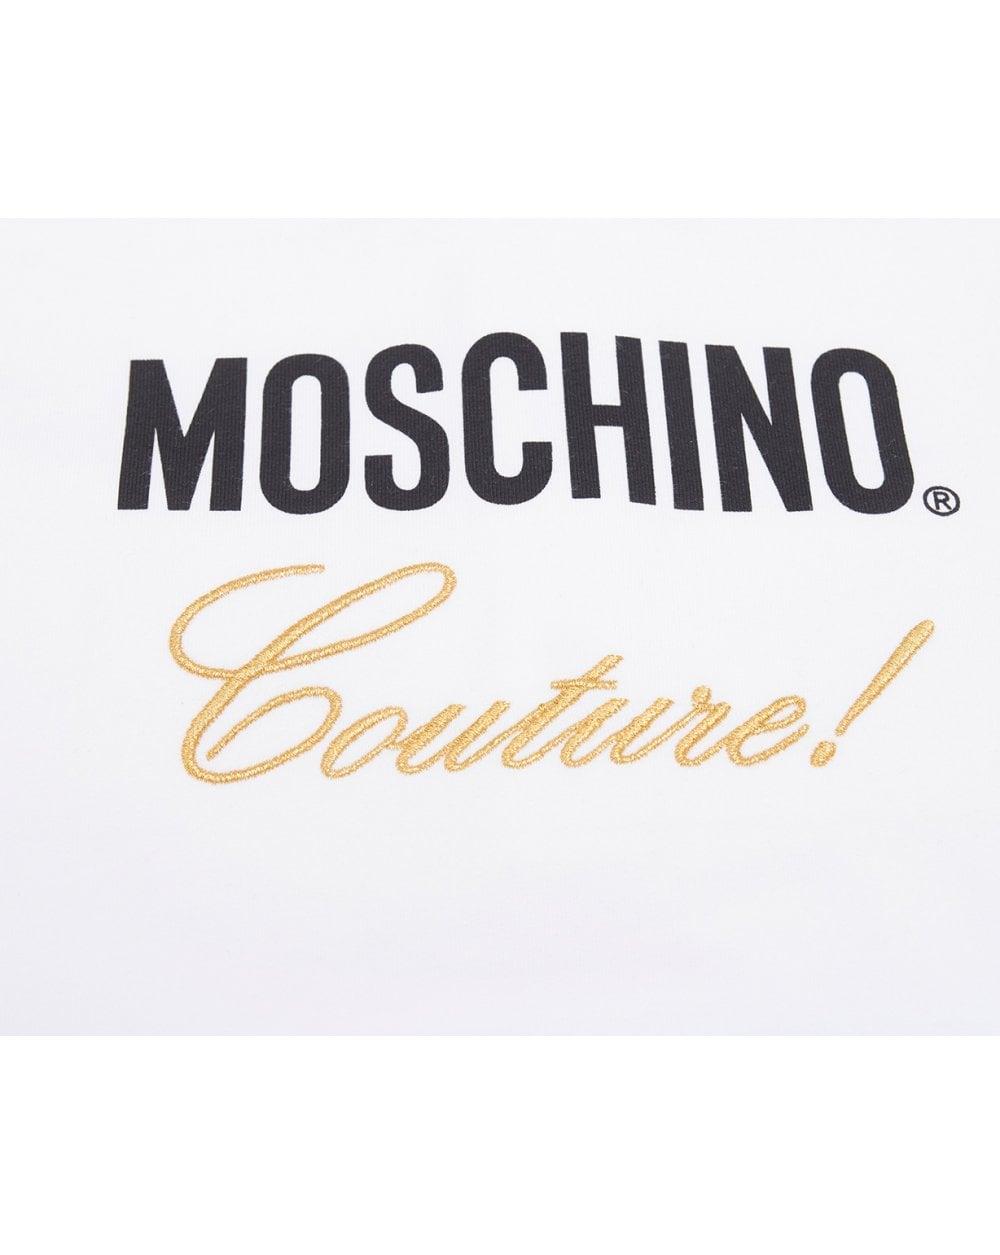 Moschino Couture Logo - Moschino Couture Logo Sweat Dress - Dresses from Psyche UK